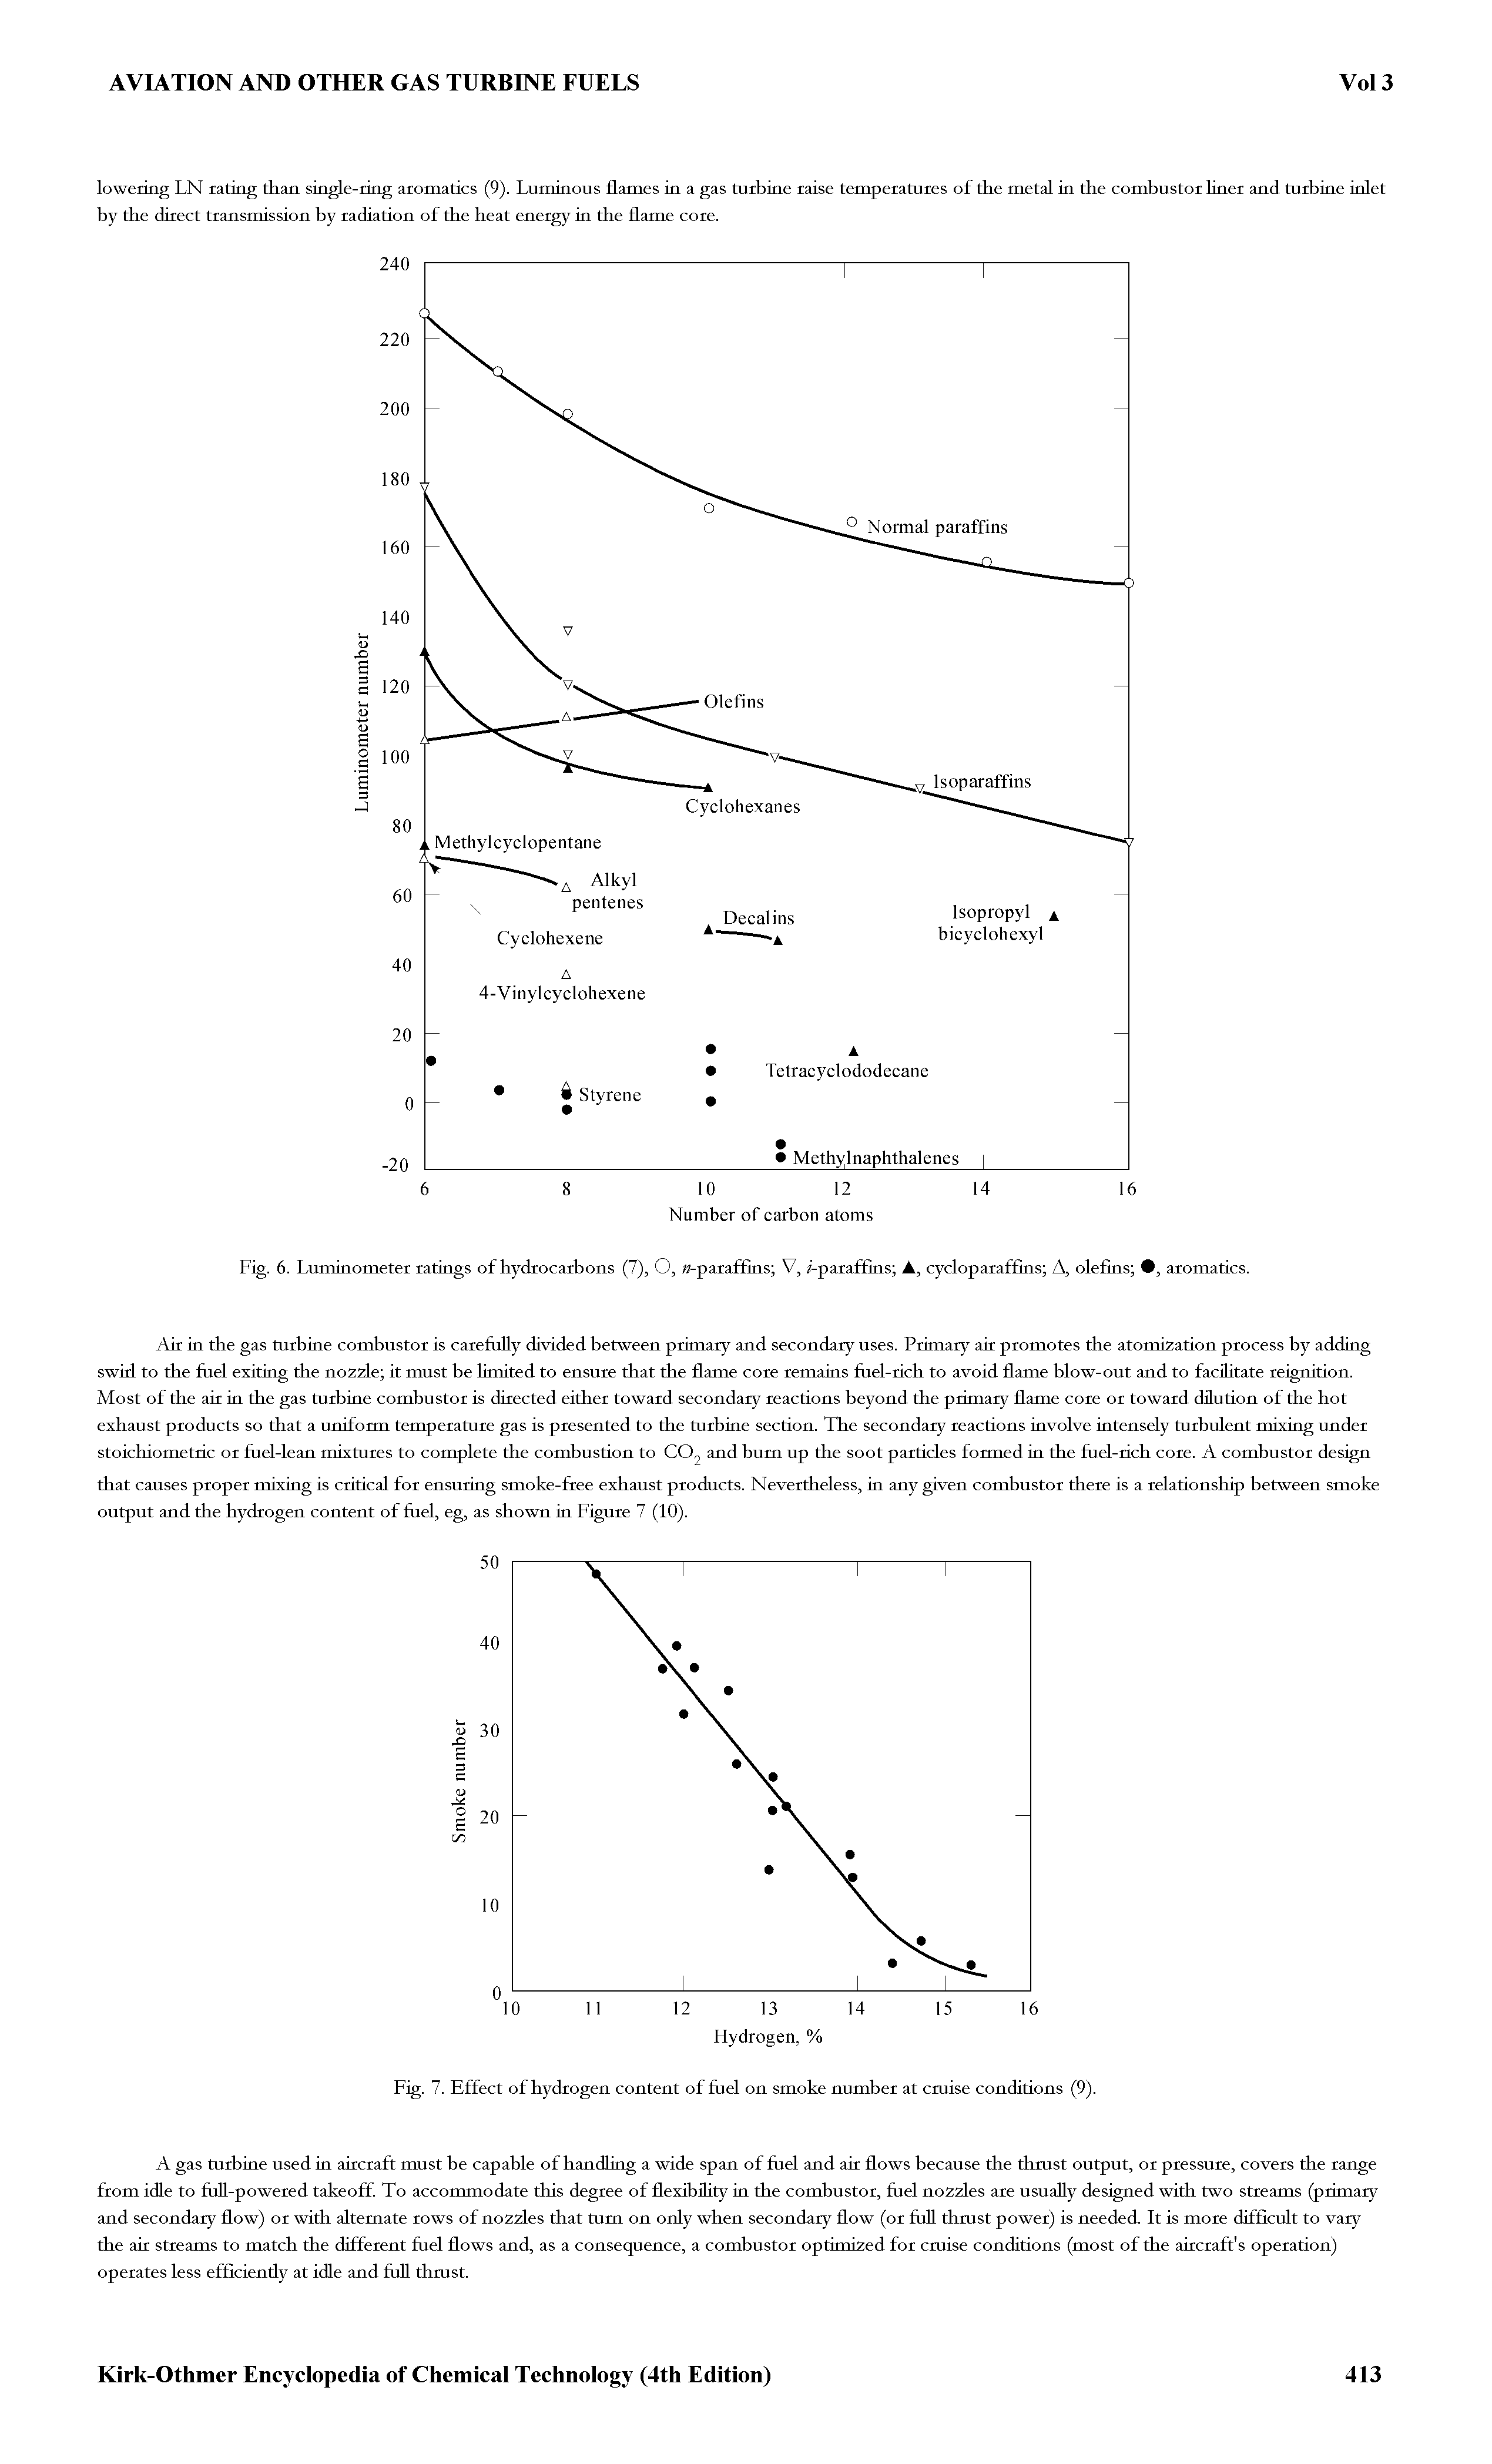 Fig. 6. Luminometer ratings of hydrocarbons (7), O, / -paraffins V, /-paraffins , cyclopataffins A, olefins , aromatics.